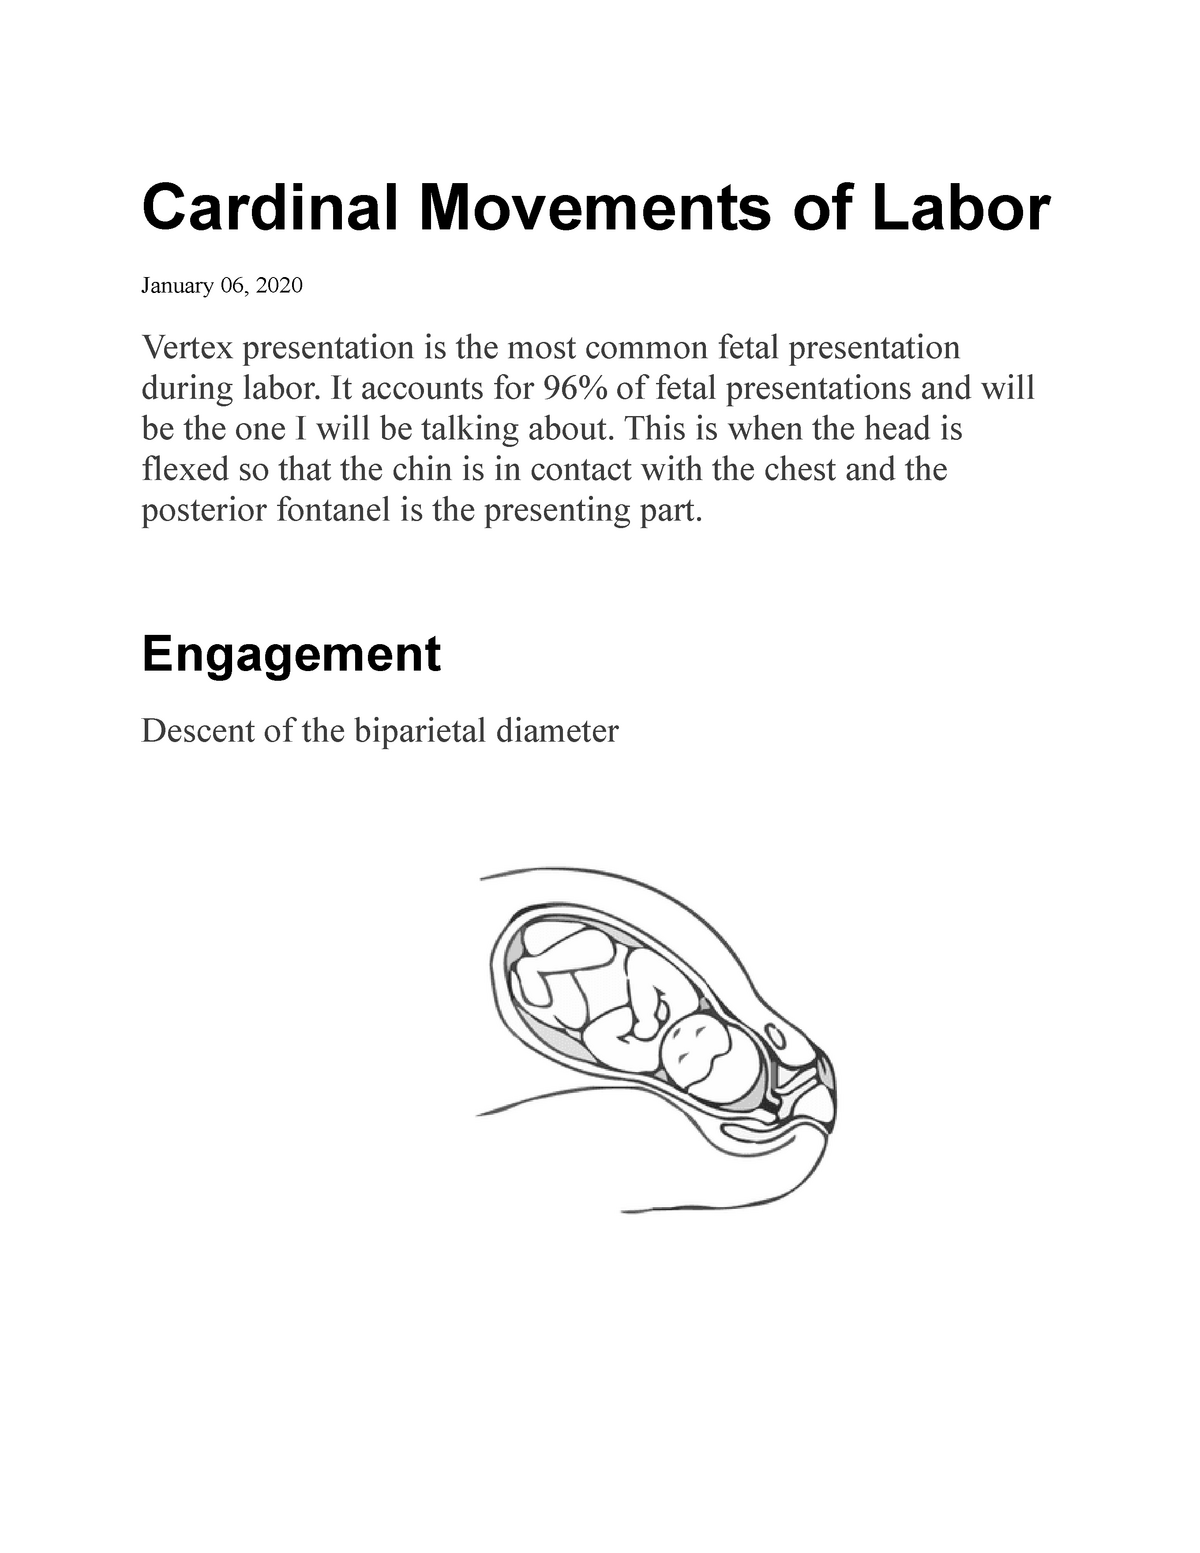 cervidil cardinal movements of labor mnemonic